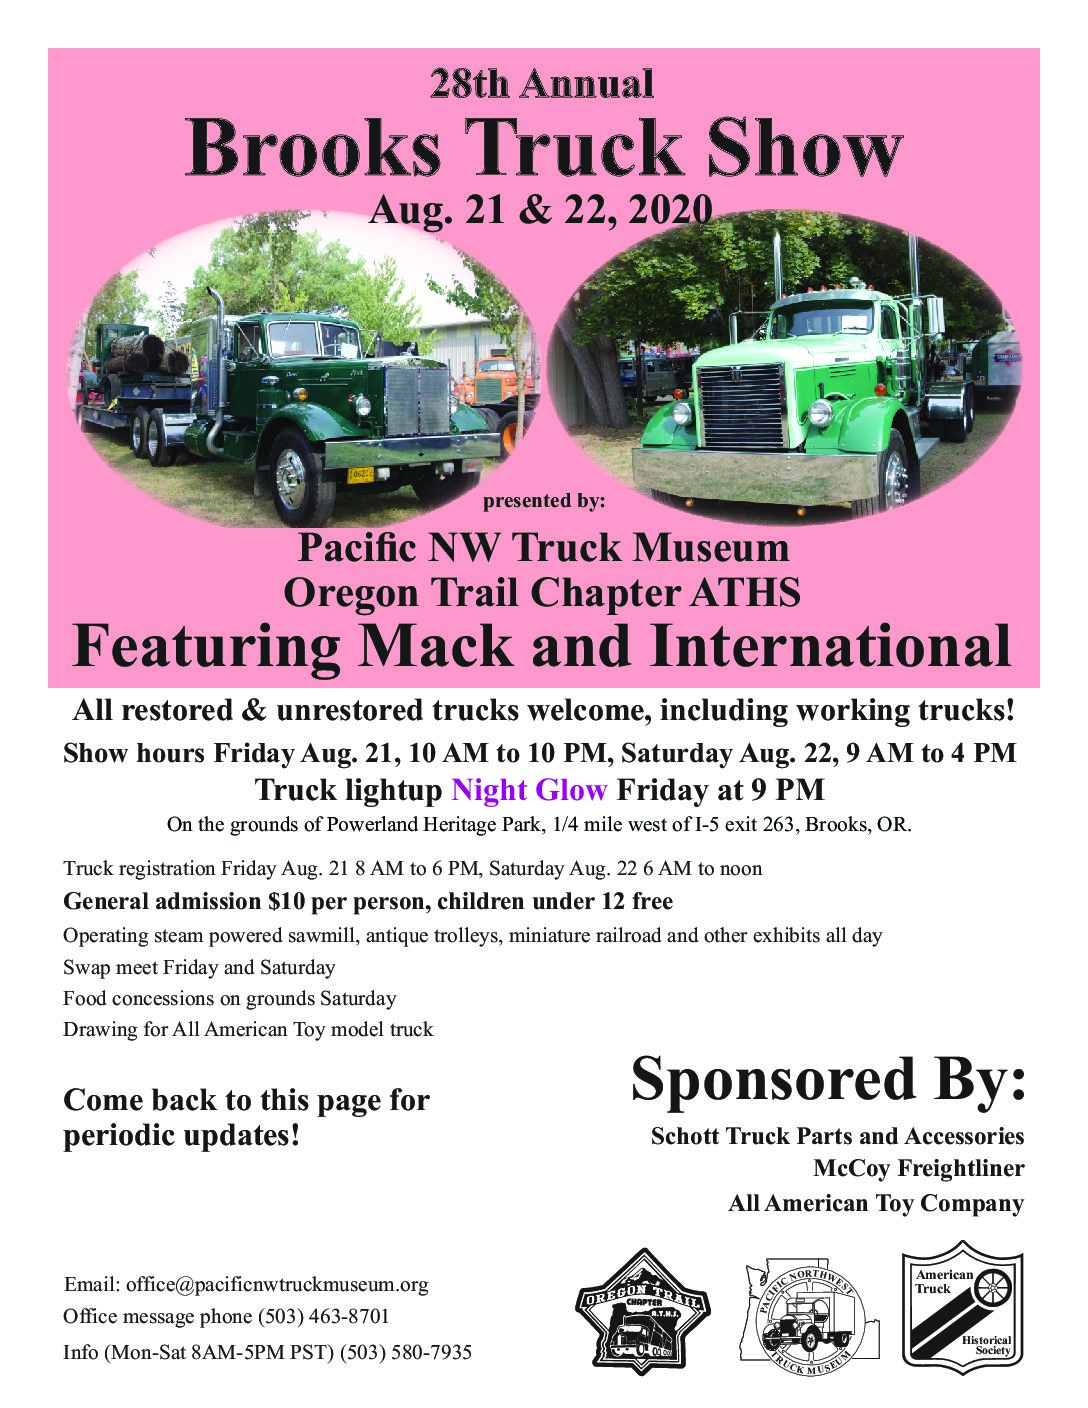 Brooks Truck Show TruckingOffice